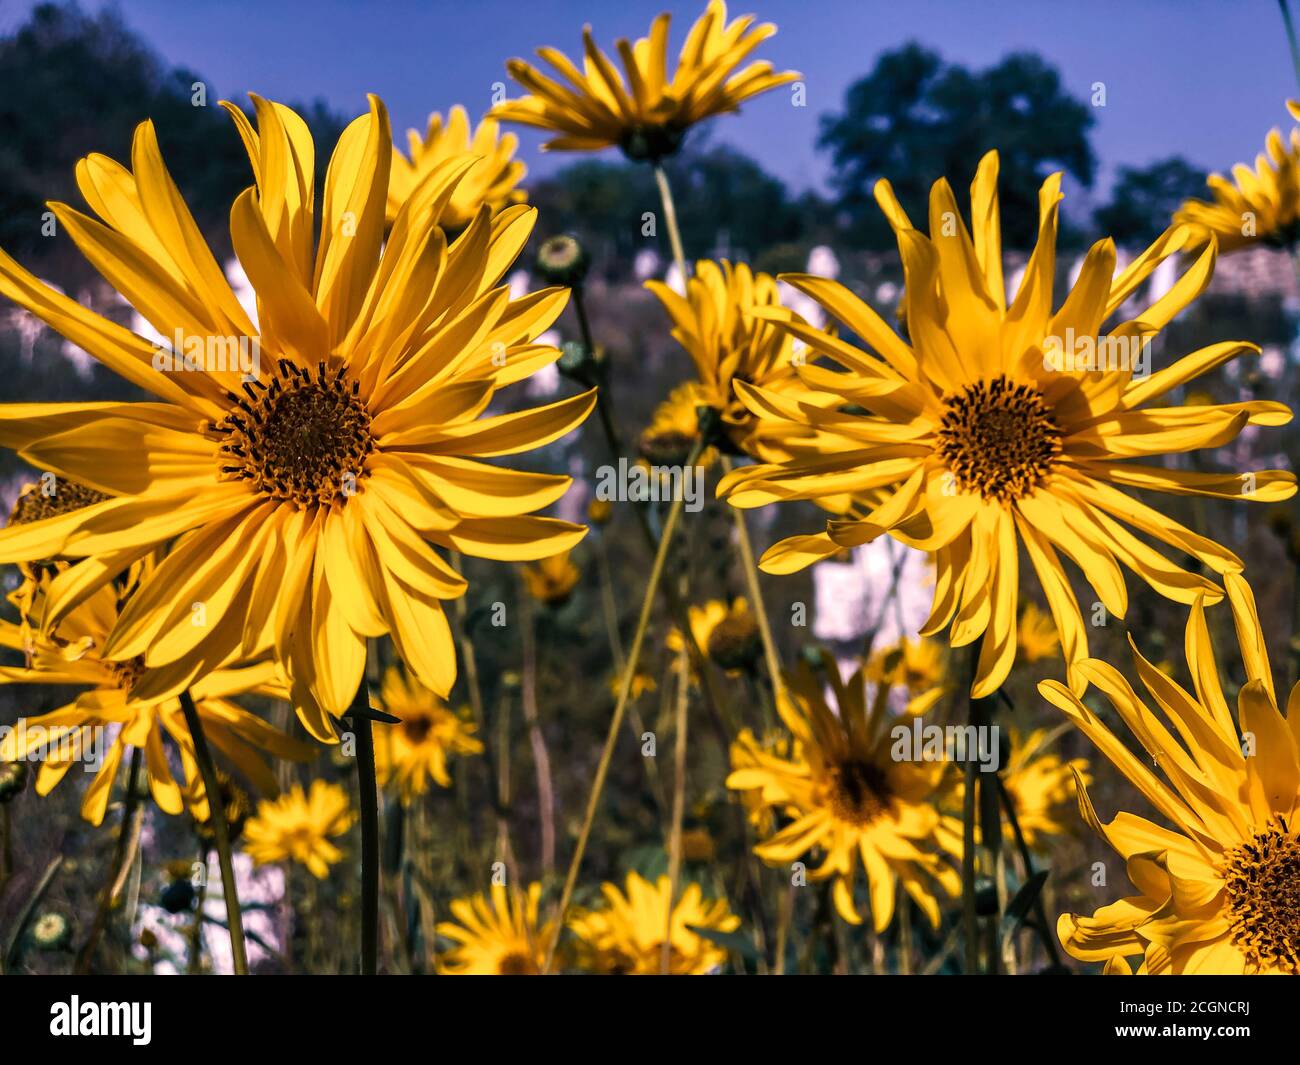 Jerusalemer Artischocke (Helianthus tuberosus), Blumen, selektiver Fokus, Nahaufnahme. Gelbe Topinambur Blüten. Gesundes Lifestyle-Konzept. Stockfoto